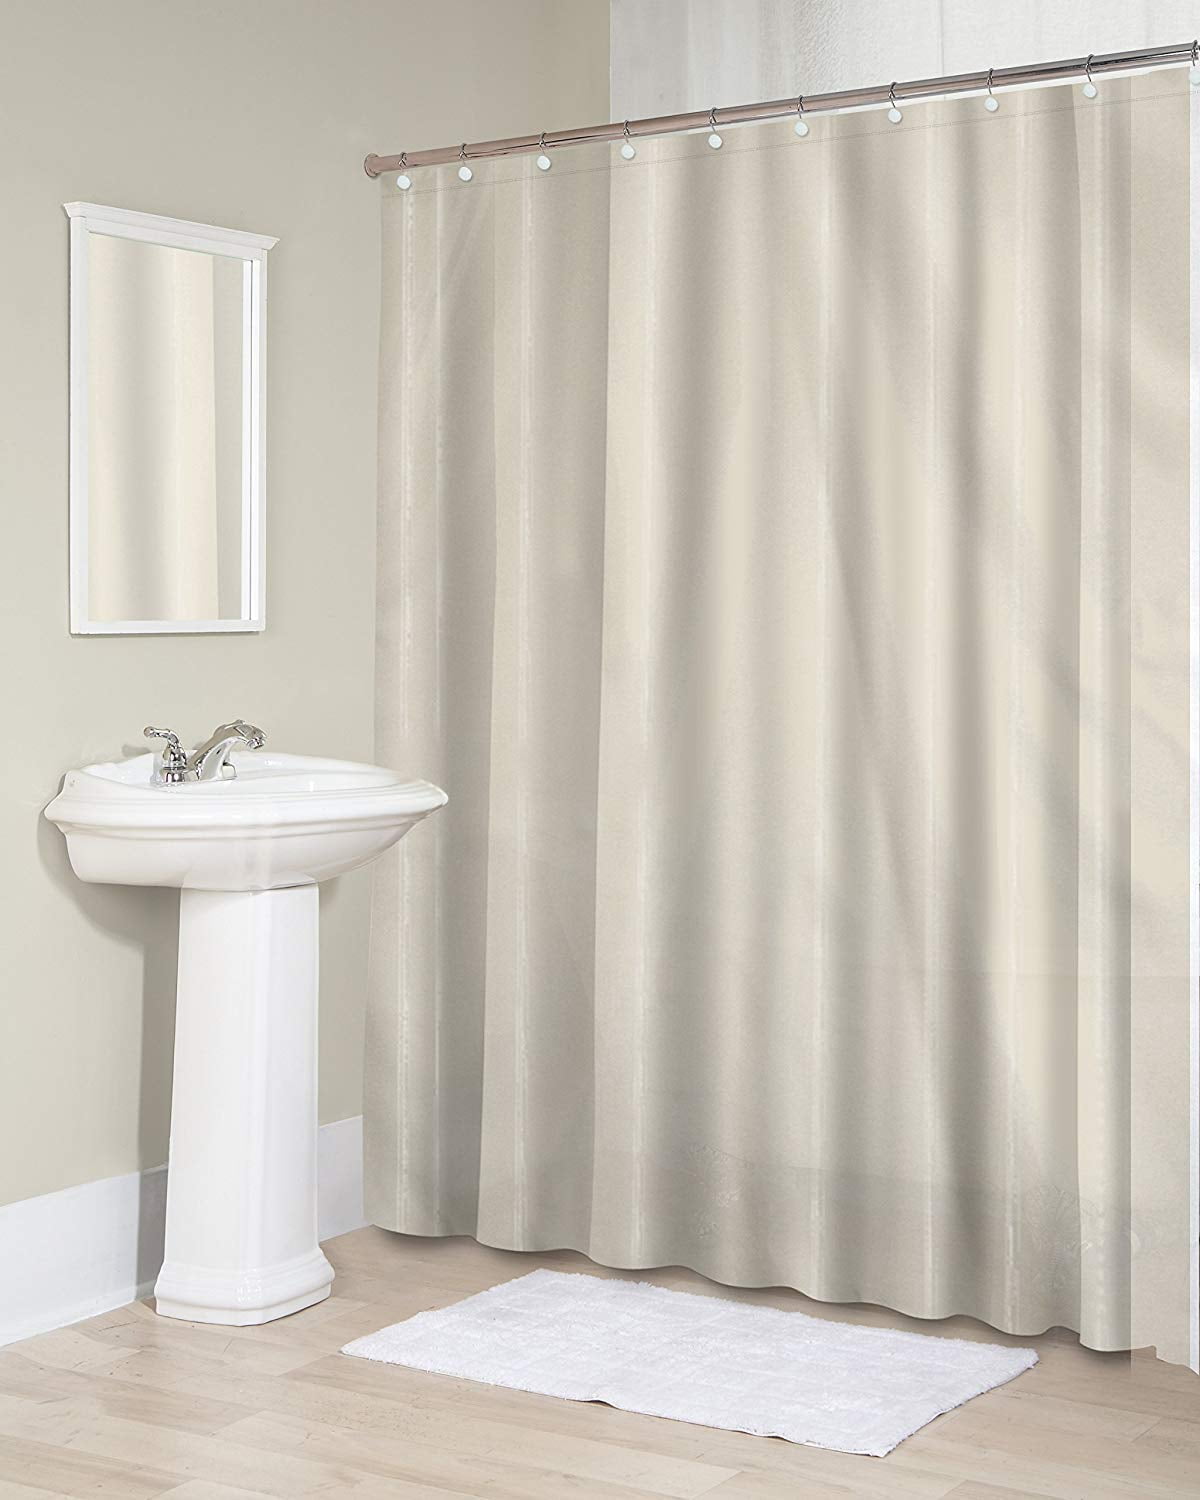 12 Hooks Waterproof Fabric Bathroom Shower Curtain Sheer Panel Decor Many Styles 